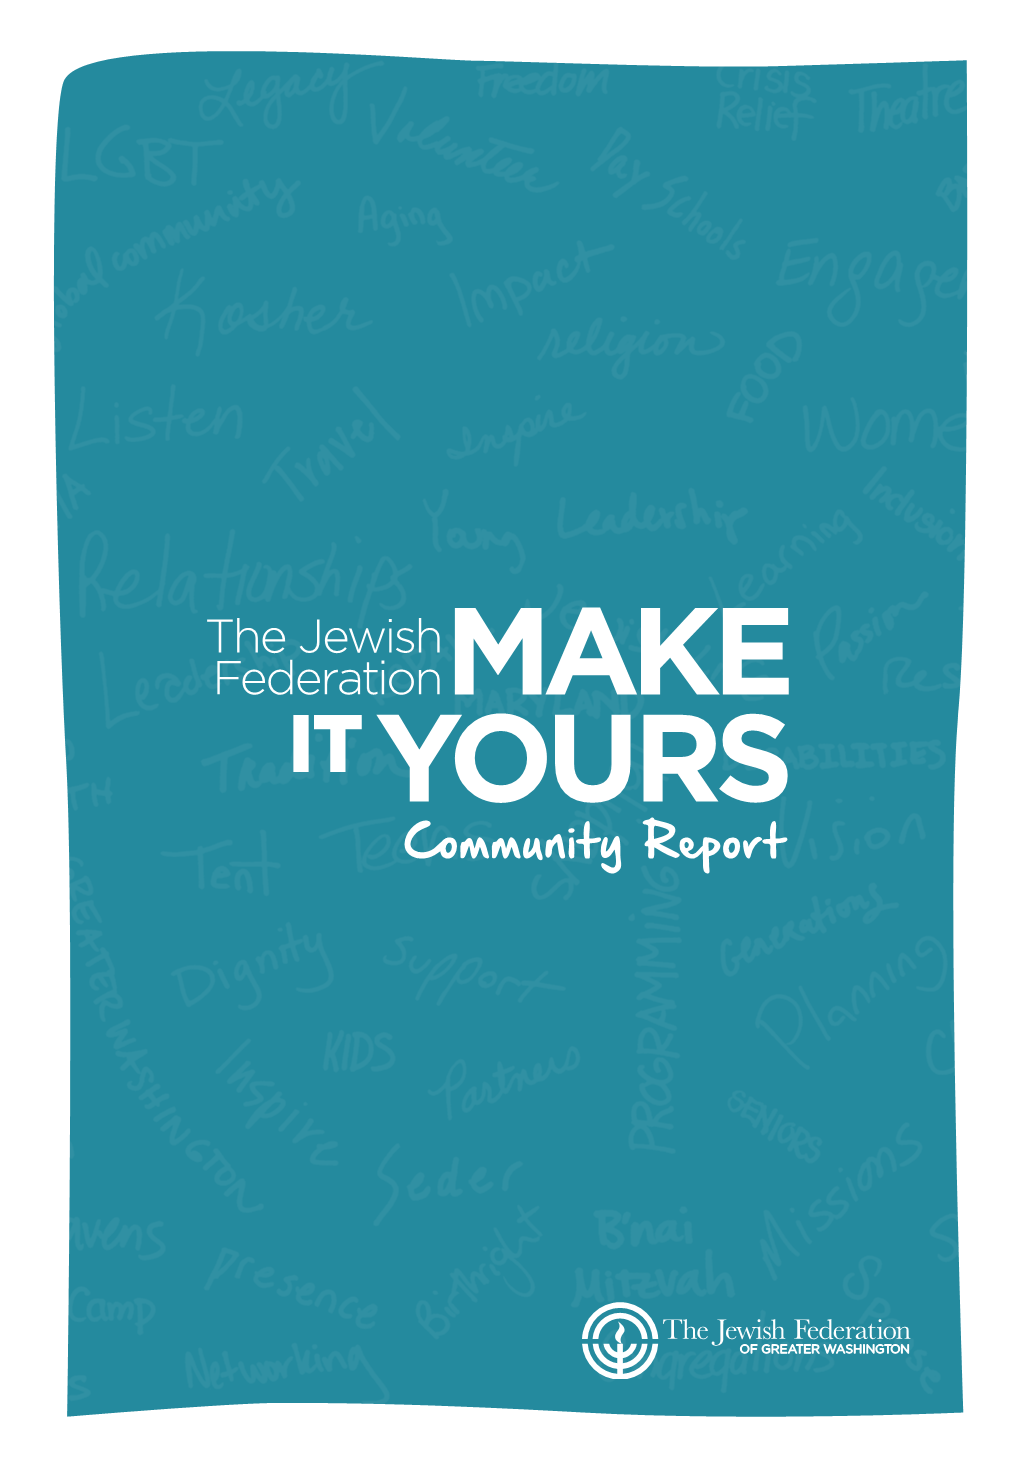 2014 Community Report